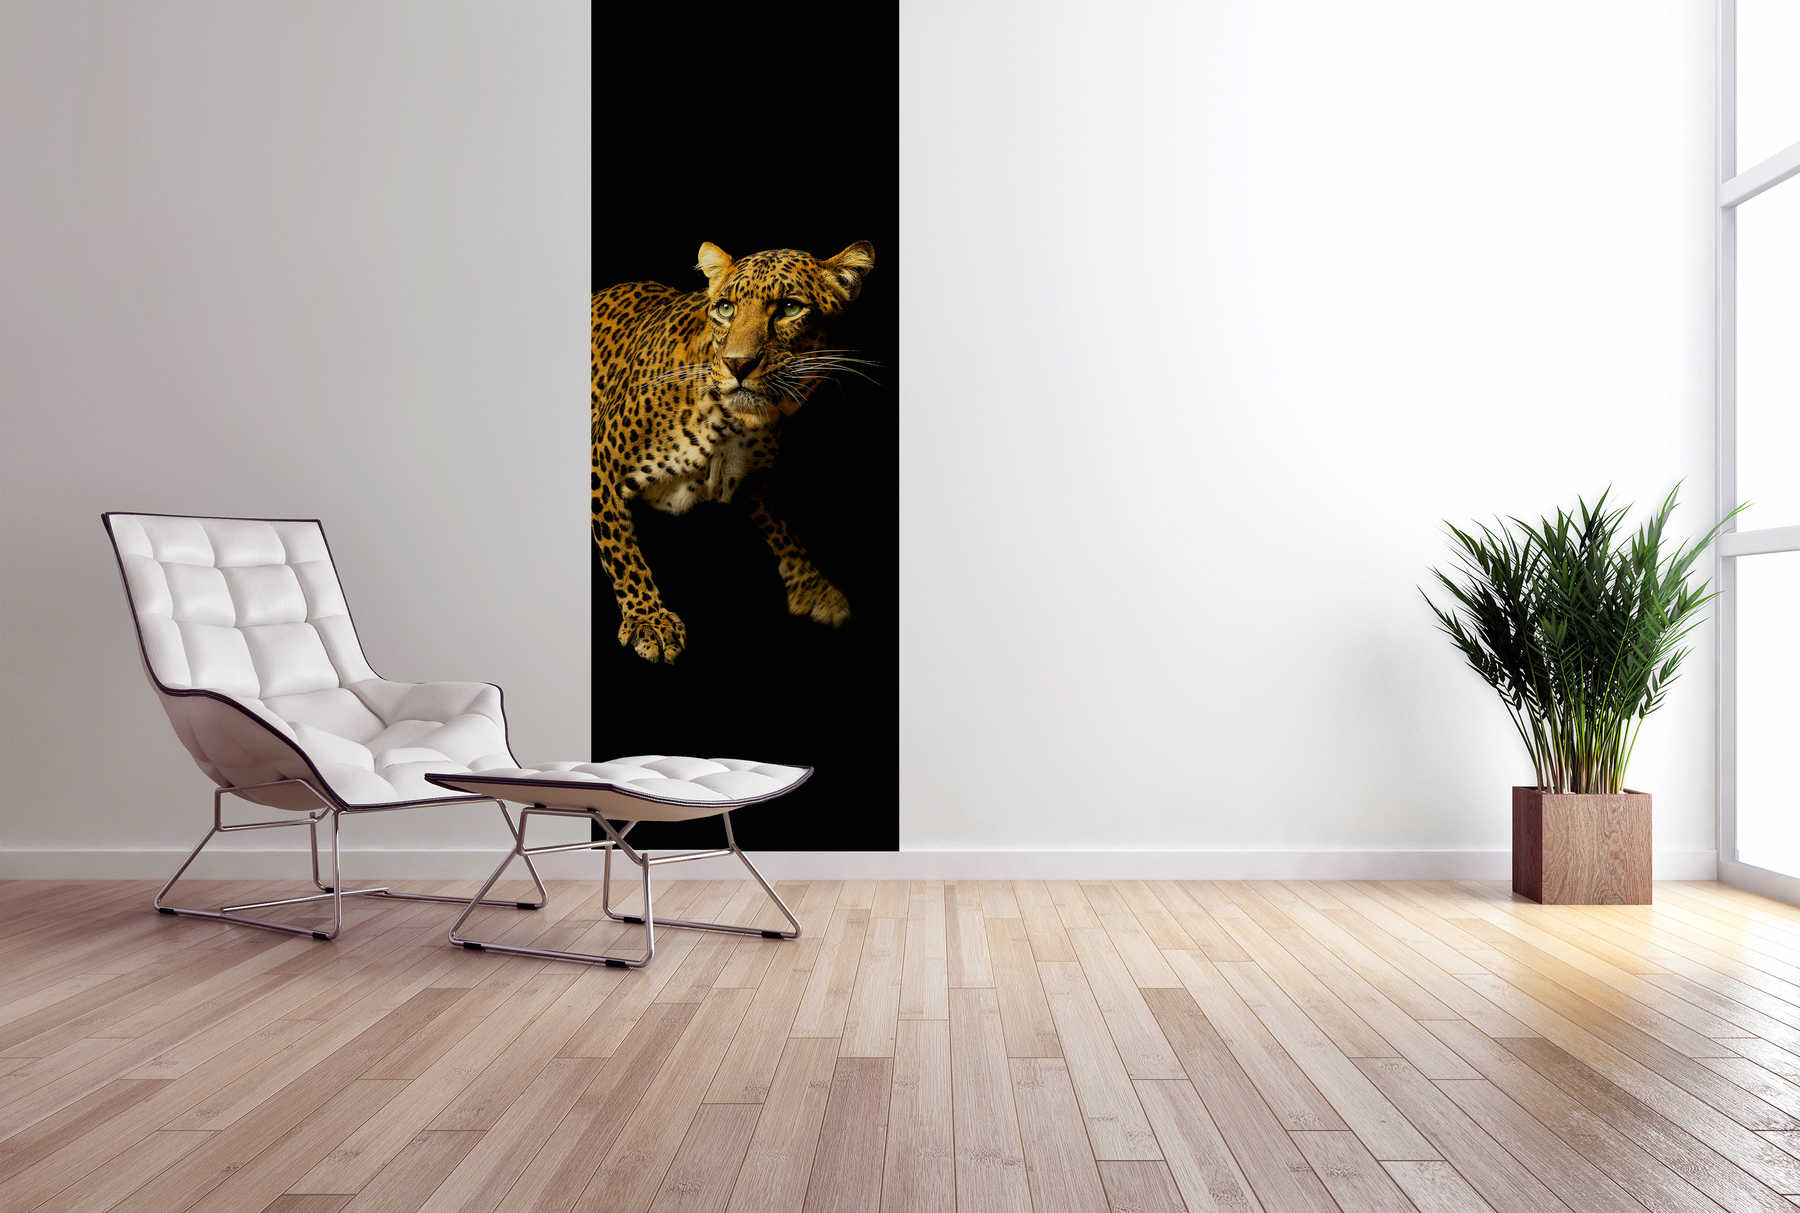             Tier Fototapete Leoparden Motiv auf Premium Glattvlies
        